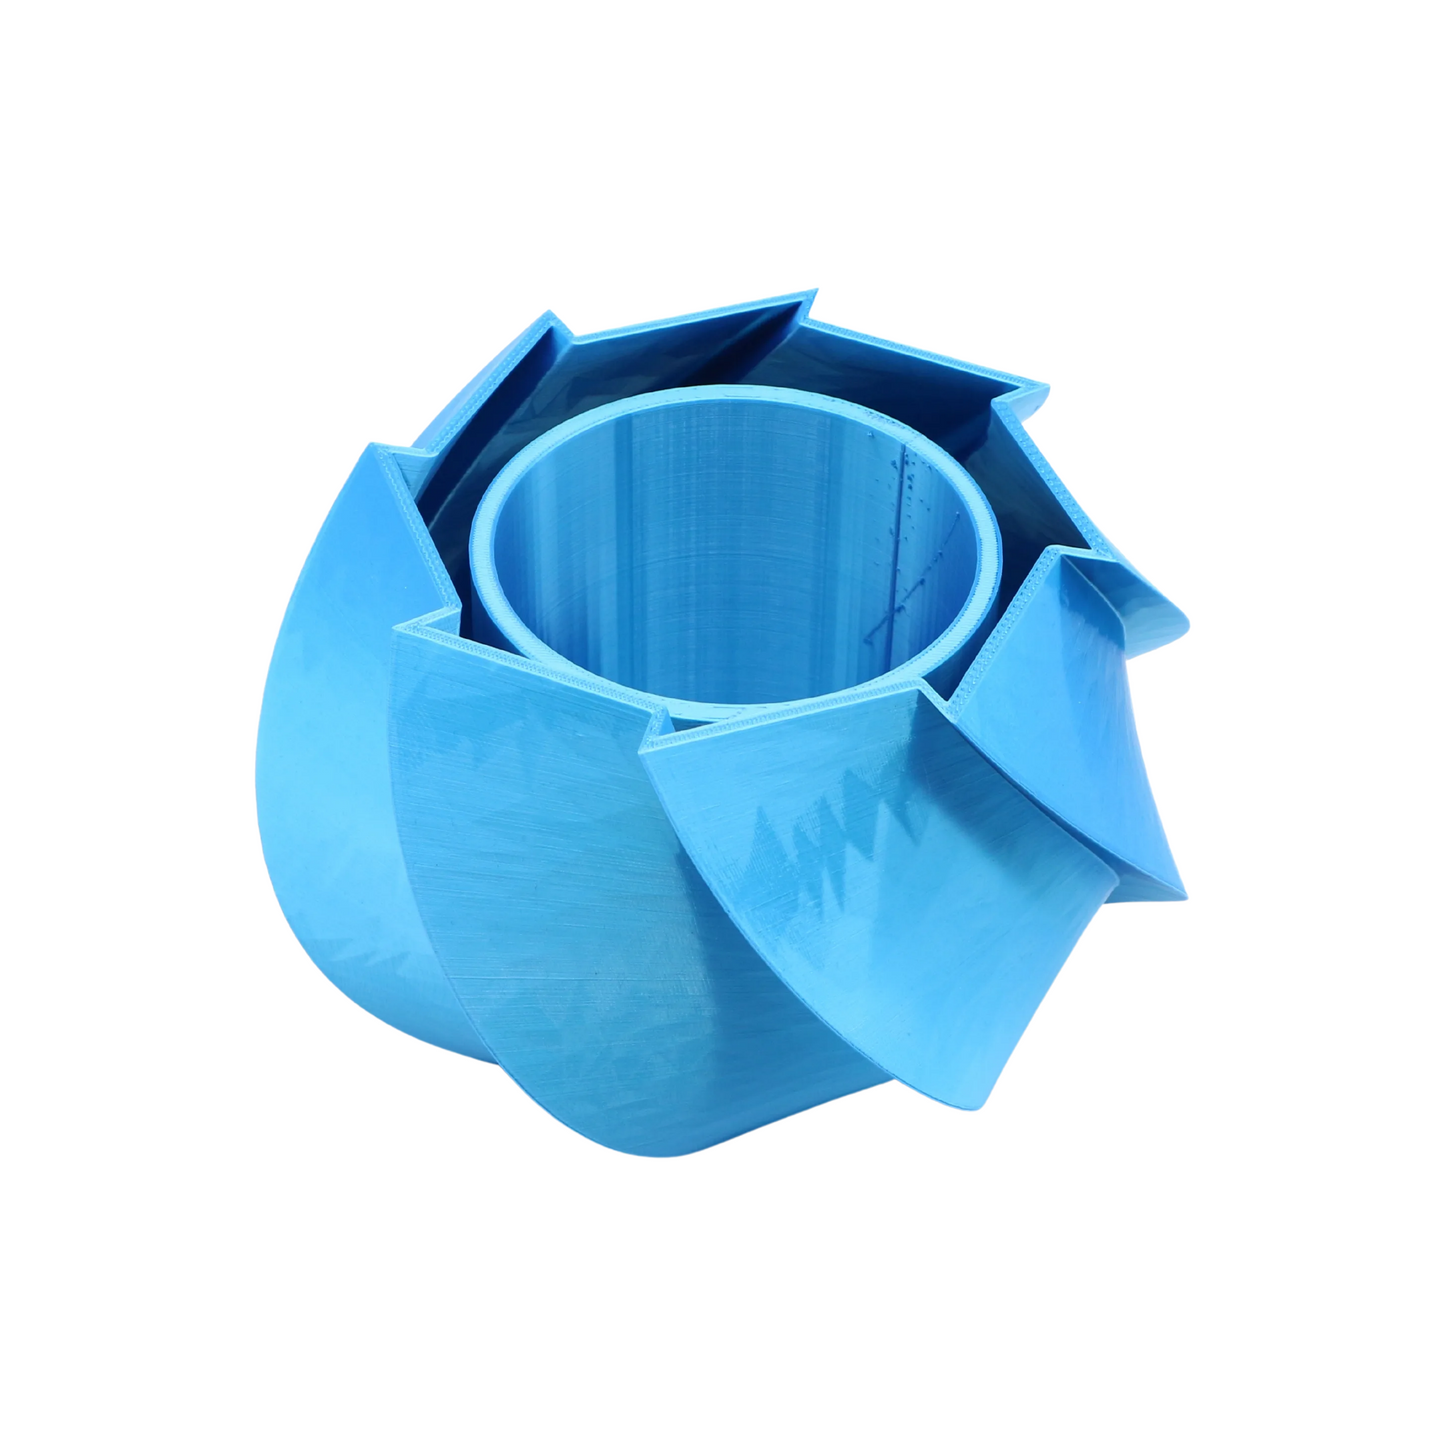 Mantua design vase shiny blue edition